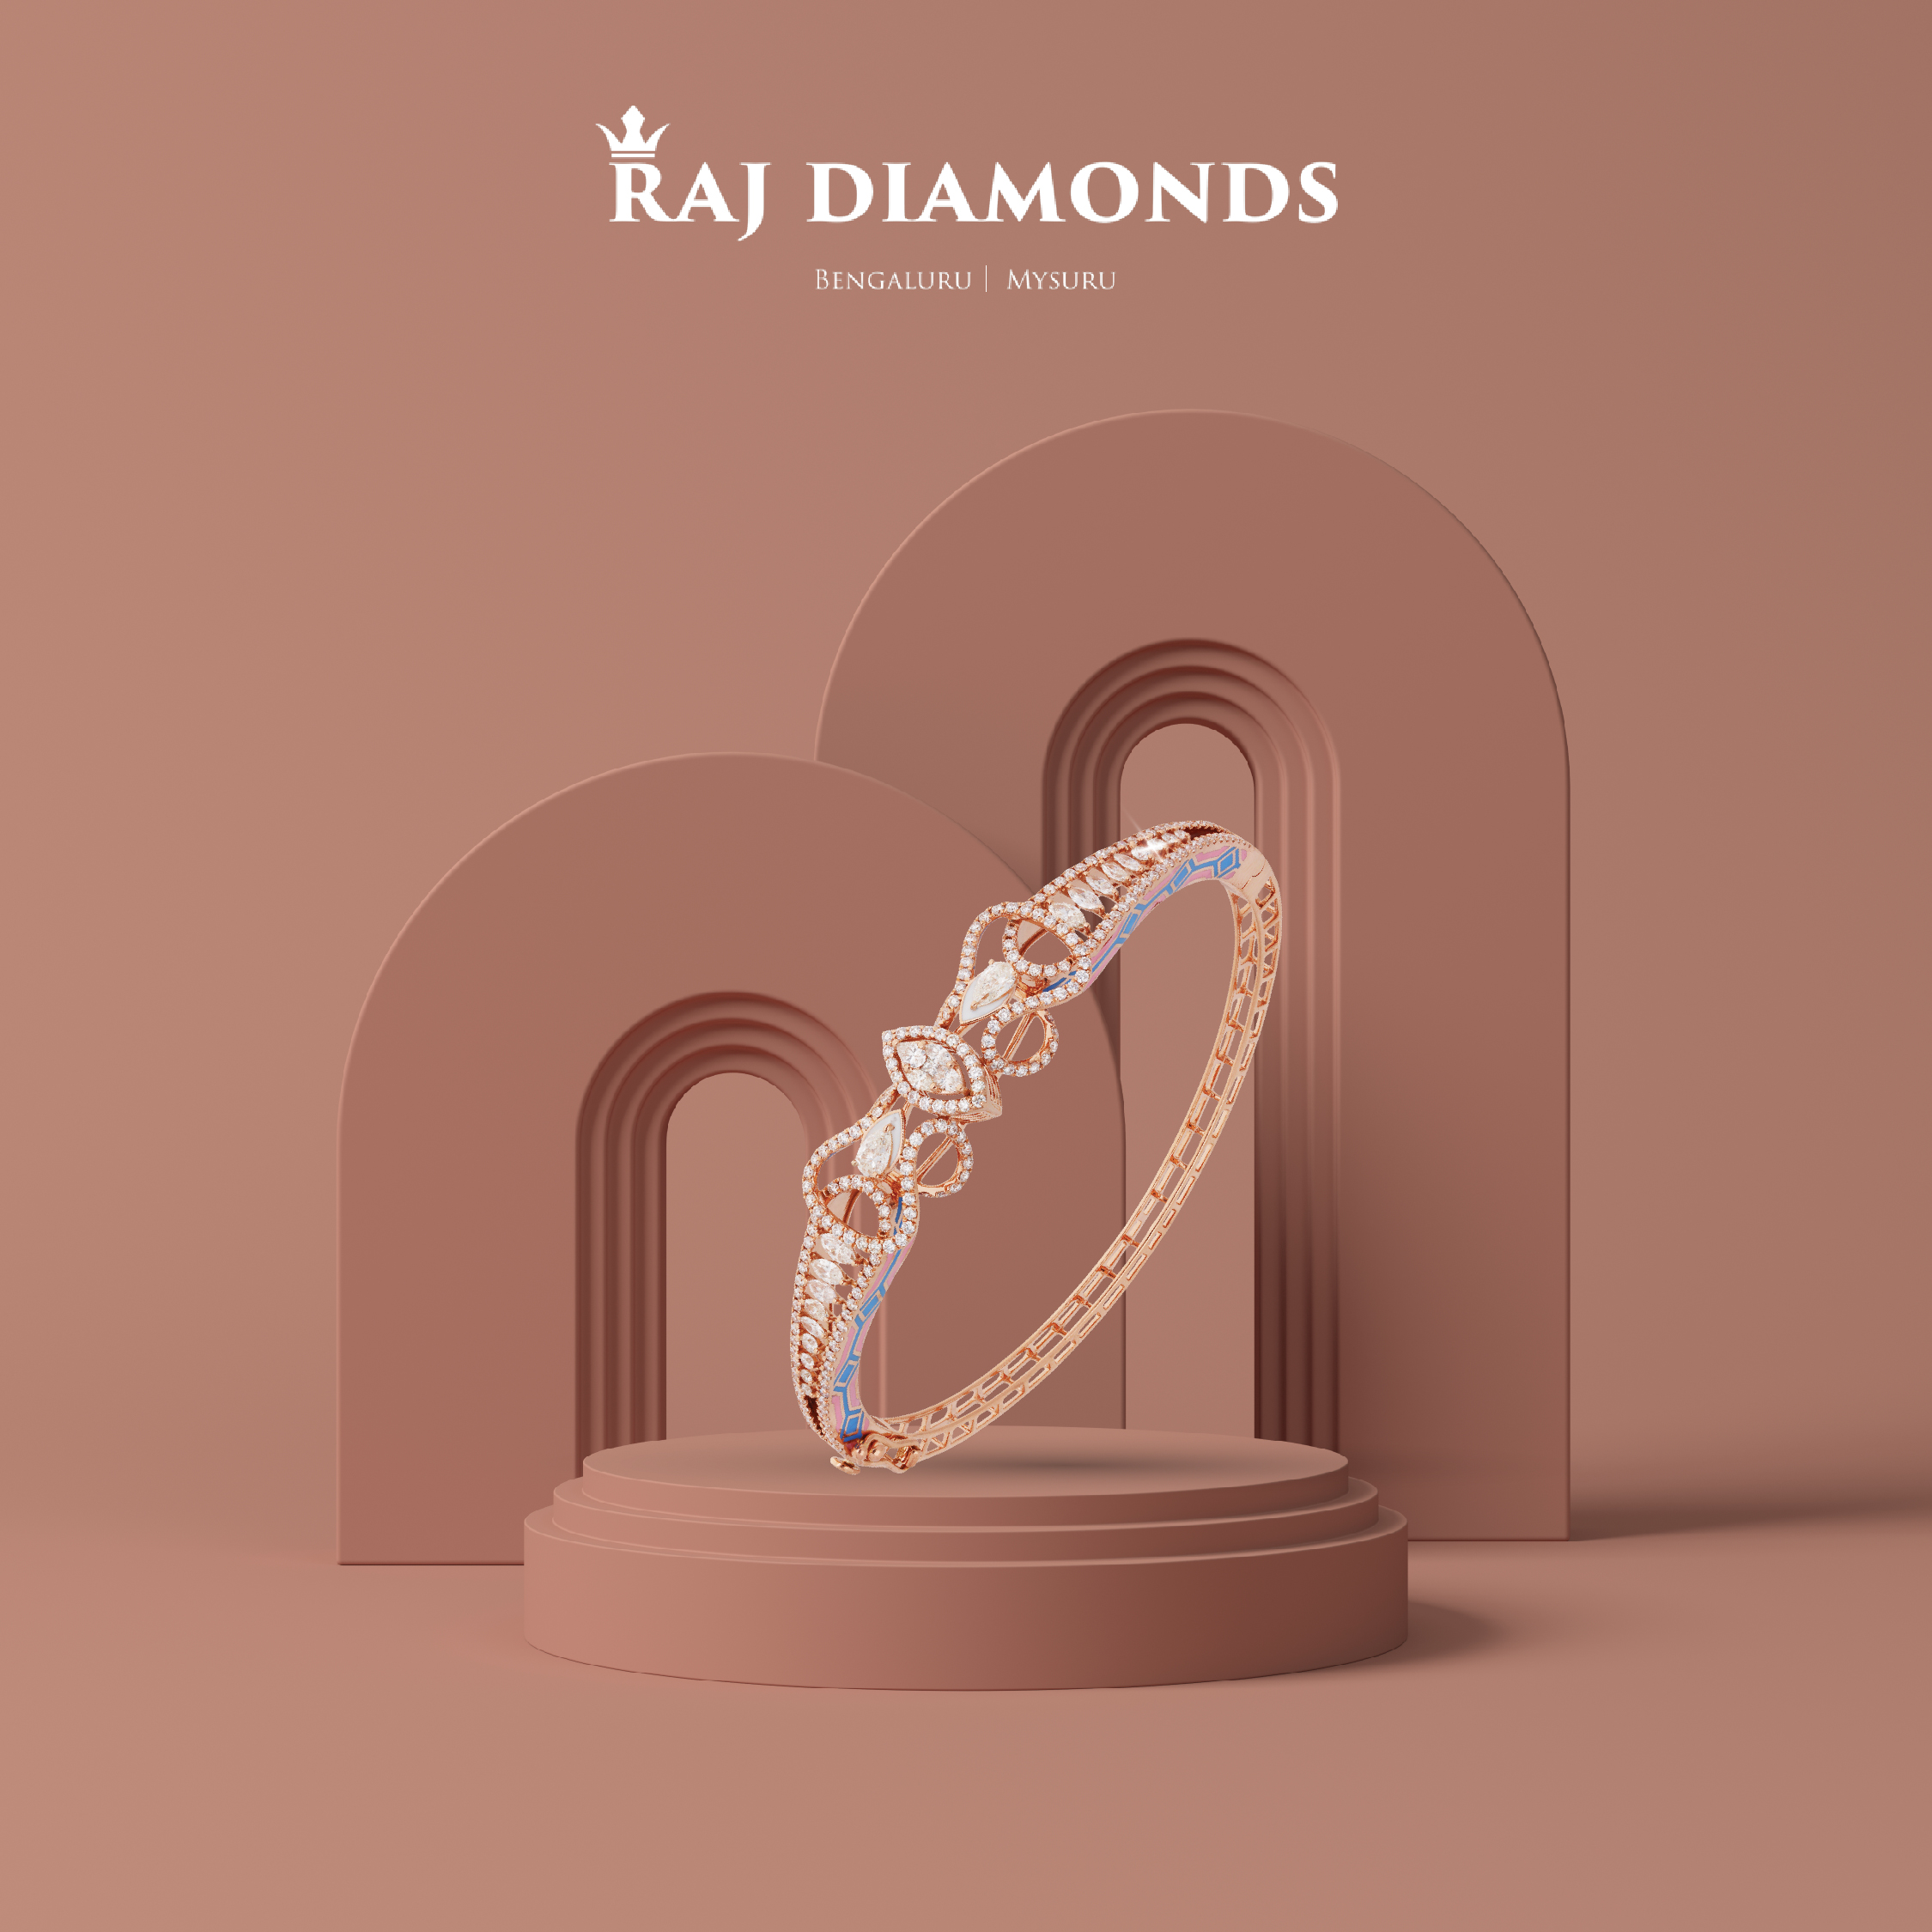 Raj Diamonds ‘FUTURO’ collection